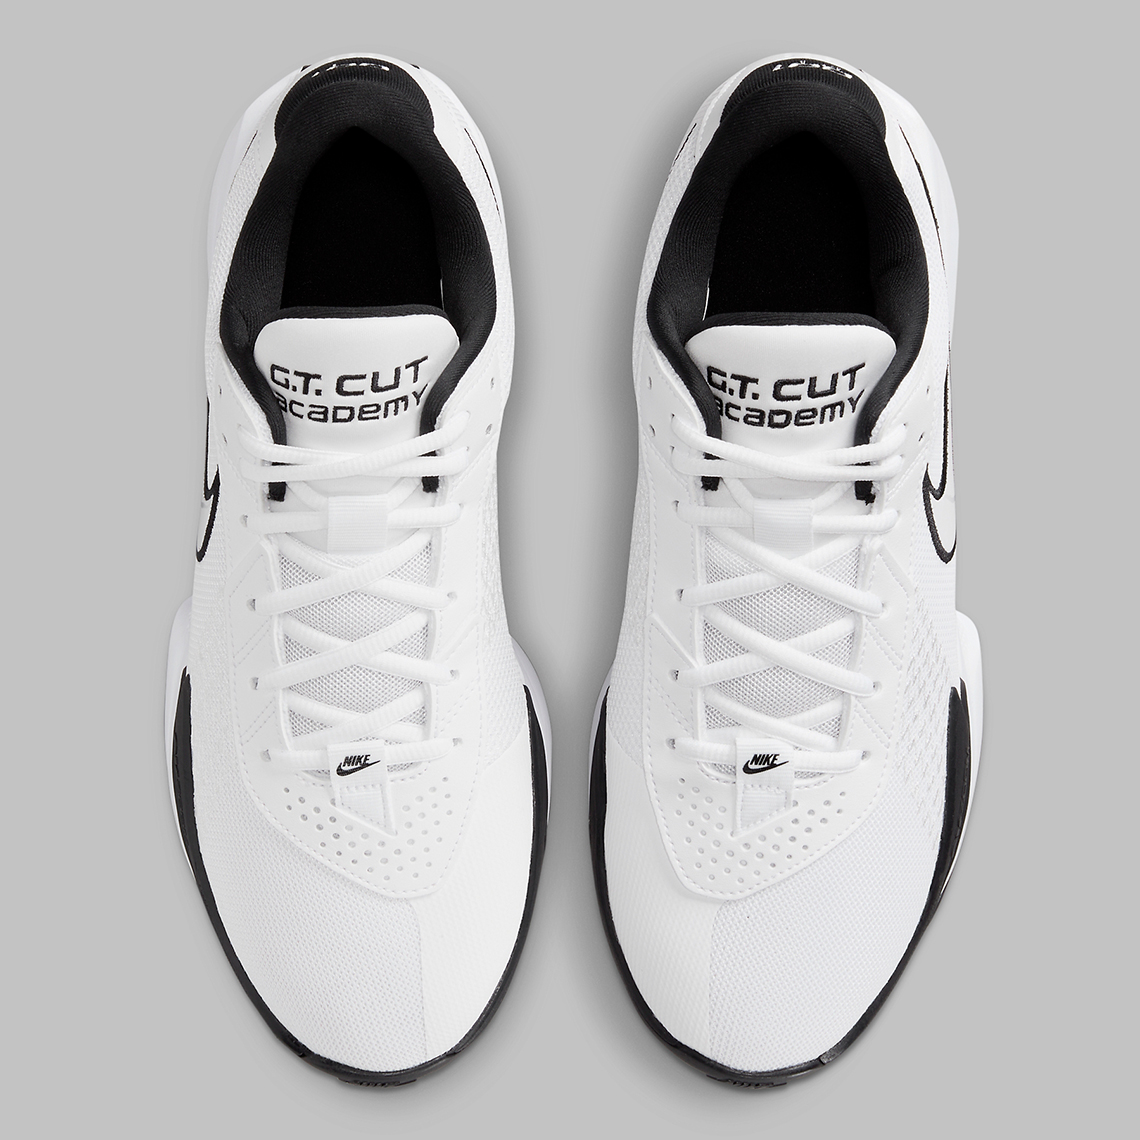 Nike Zoom Gt Cut Academy White Black Fb2599 100 5